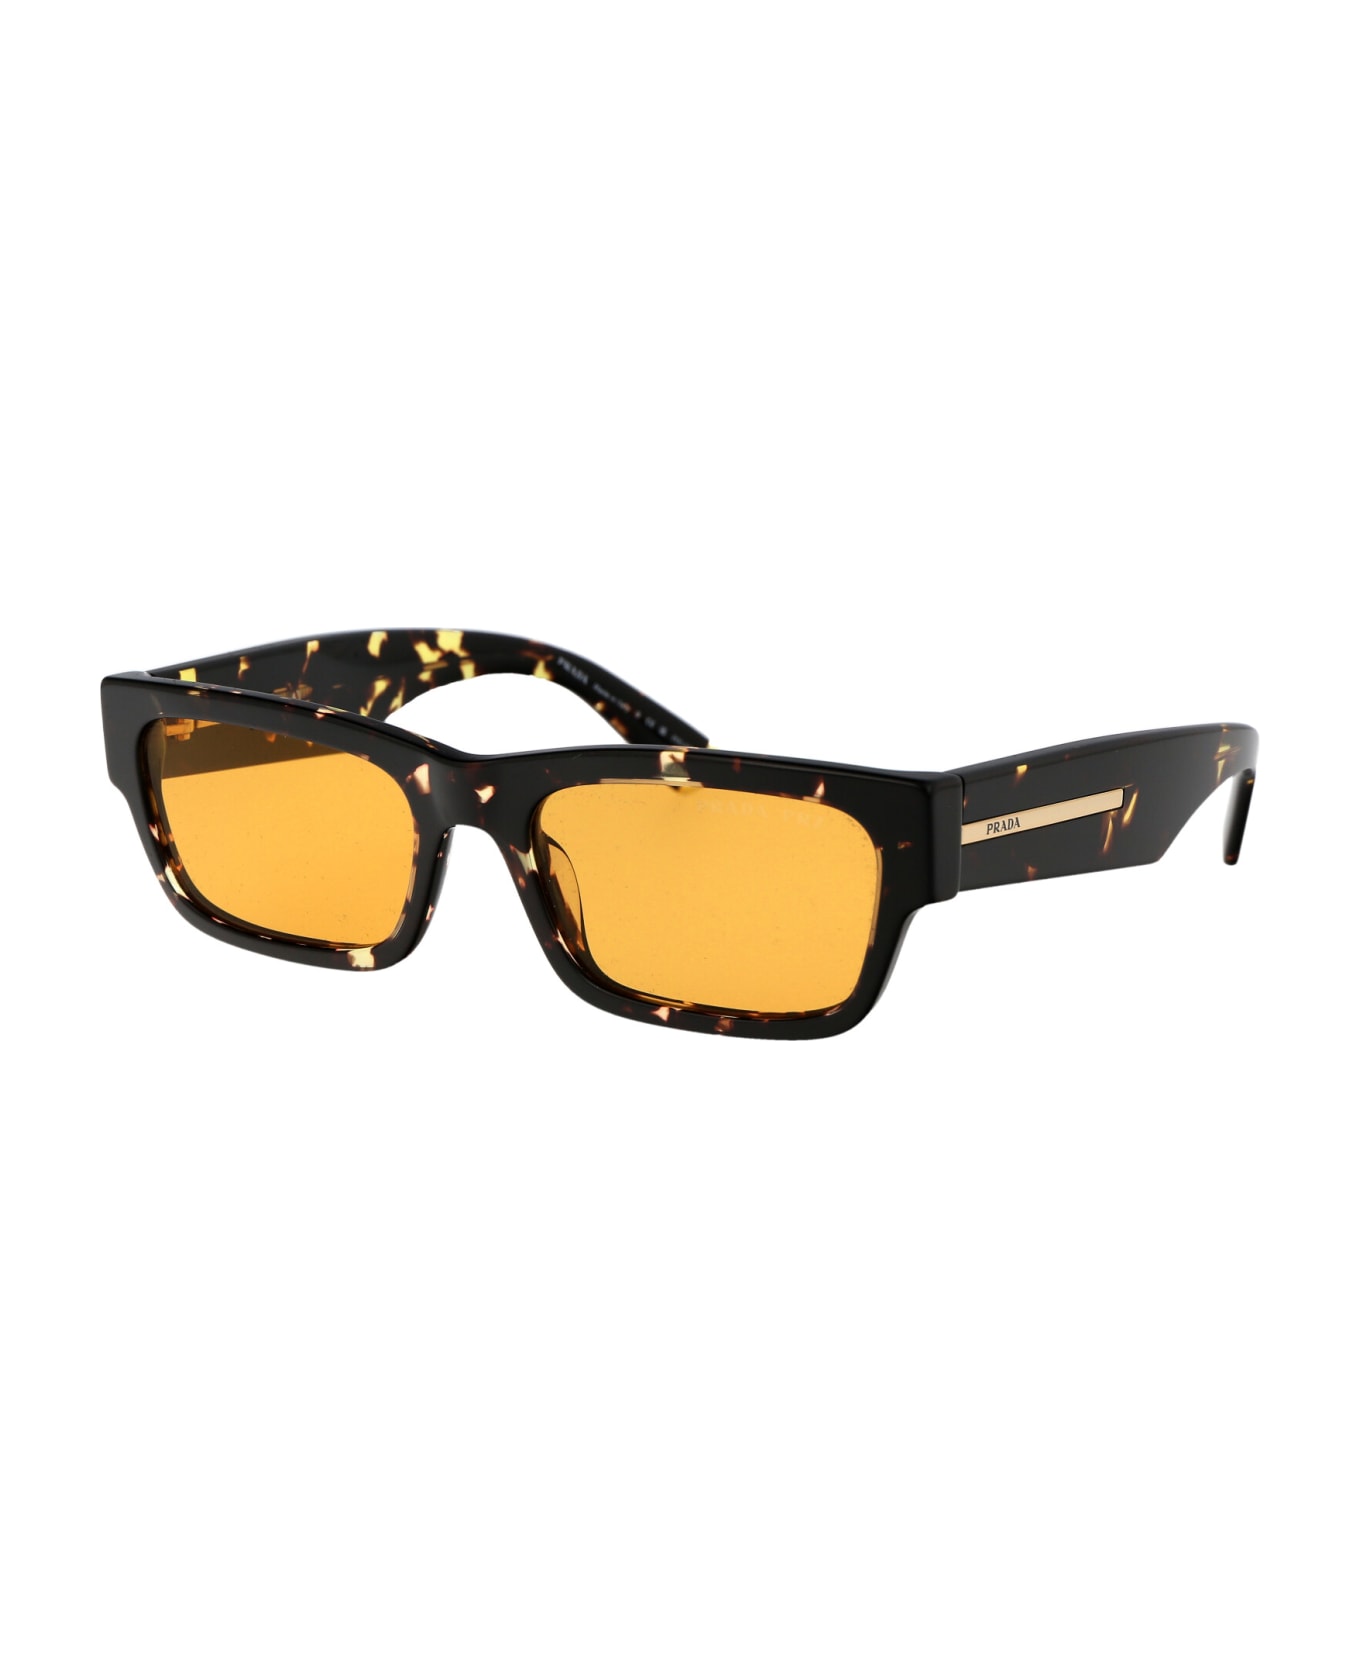 Prada Eyewear 0pr A03s Sunglasses - 16O20C Havana Black/Yellow サングラス